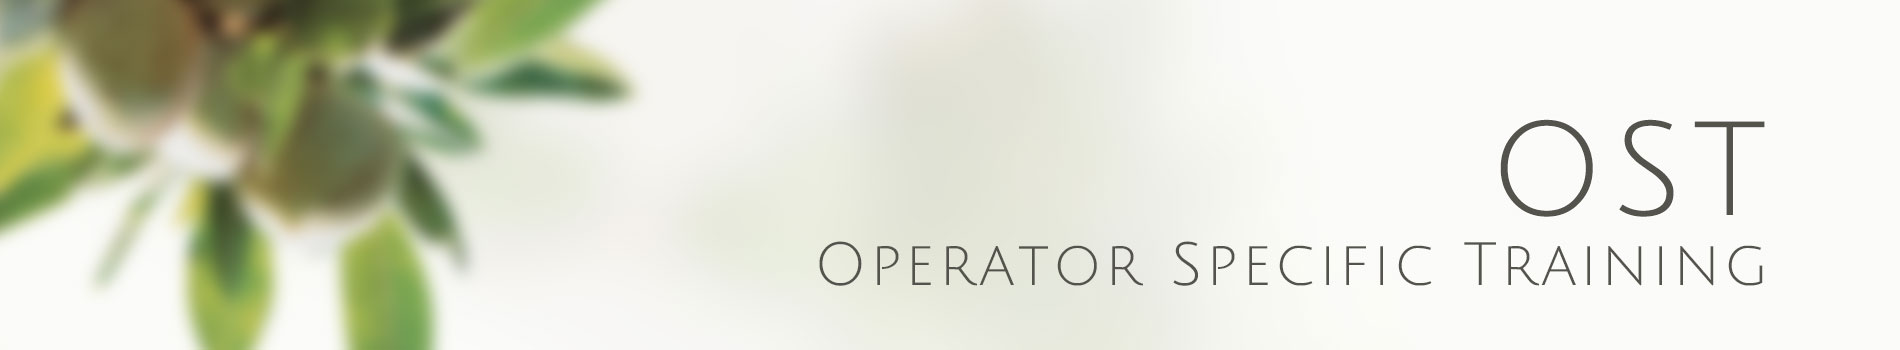 Operator Specific Training